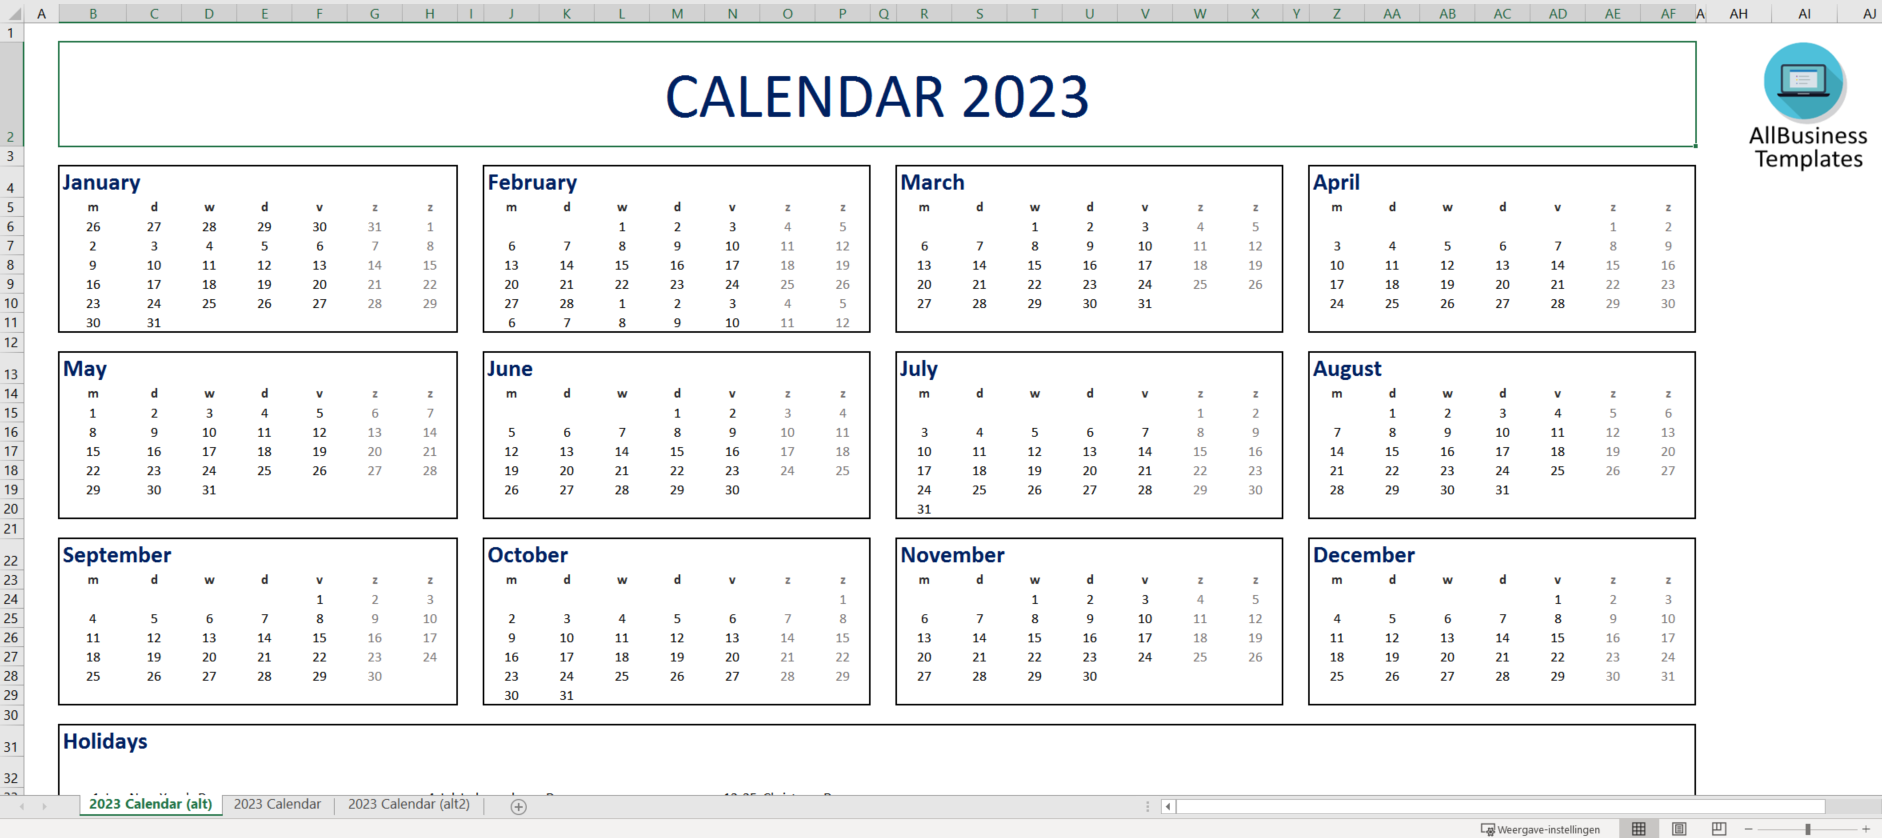 gratis-calendar-2023-excel